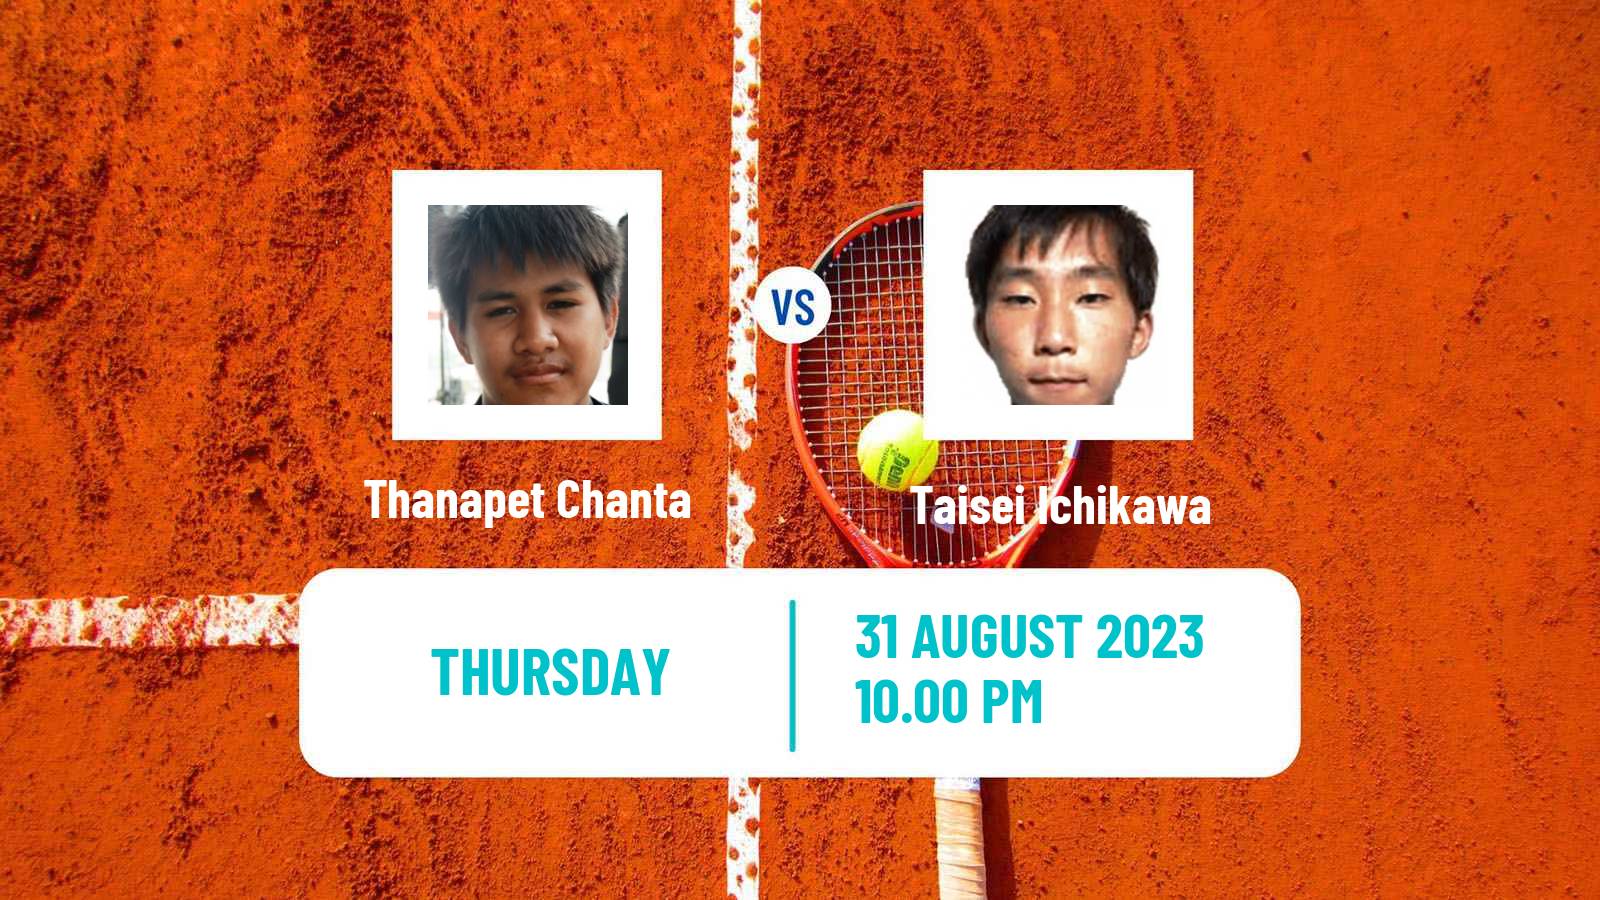 Tennis ITF M15 Nakhon Si Thammarat 7 Men Thanapet Chanta - Taisei Ichikawa